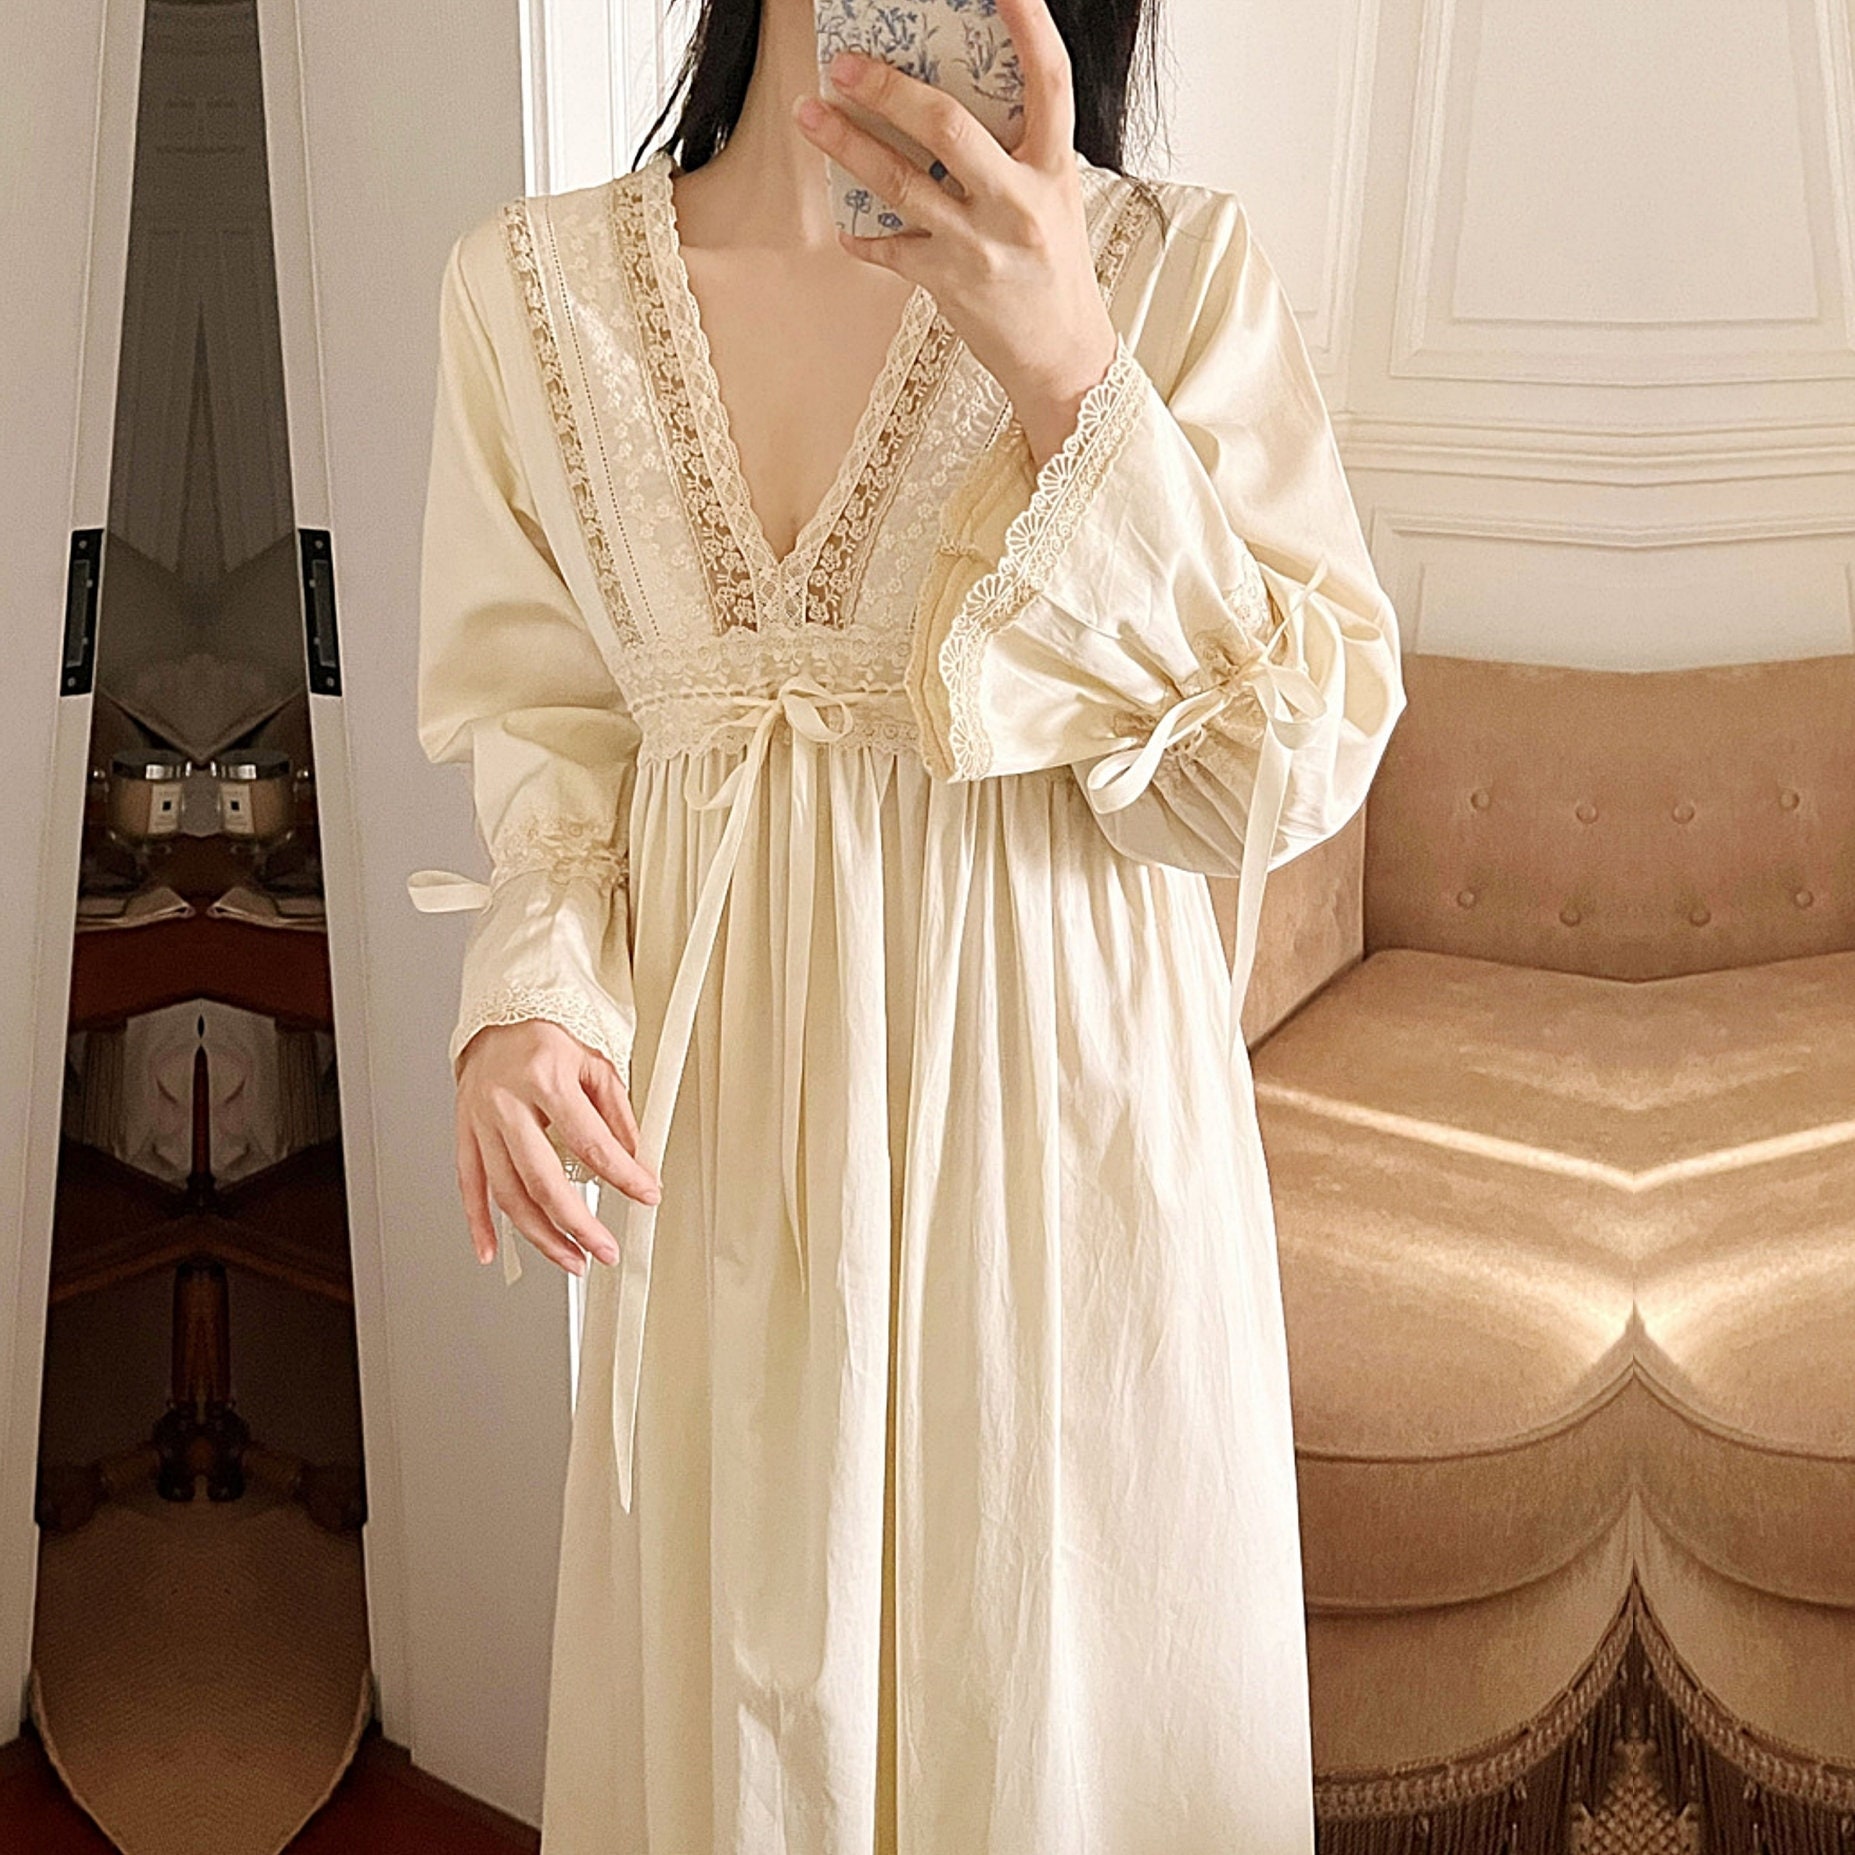 QIKEGooods 100% Cotton Victorian Nightgown Short-Sleeve Women Nightdress Pajamas Sleep Shirt 